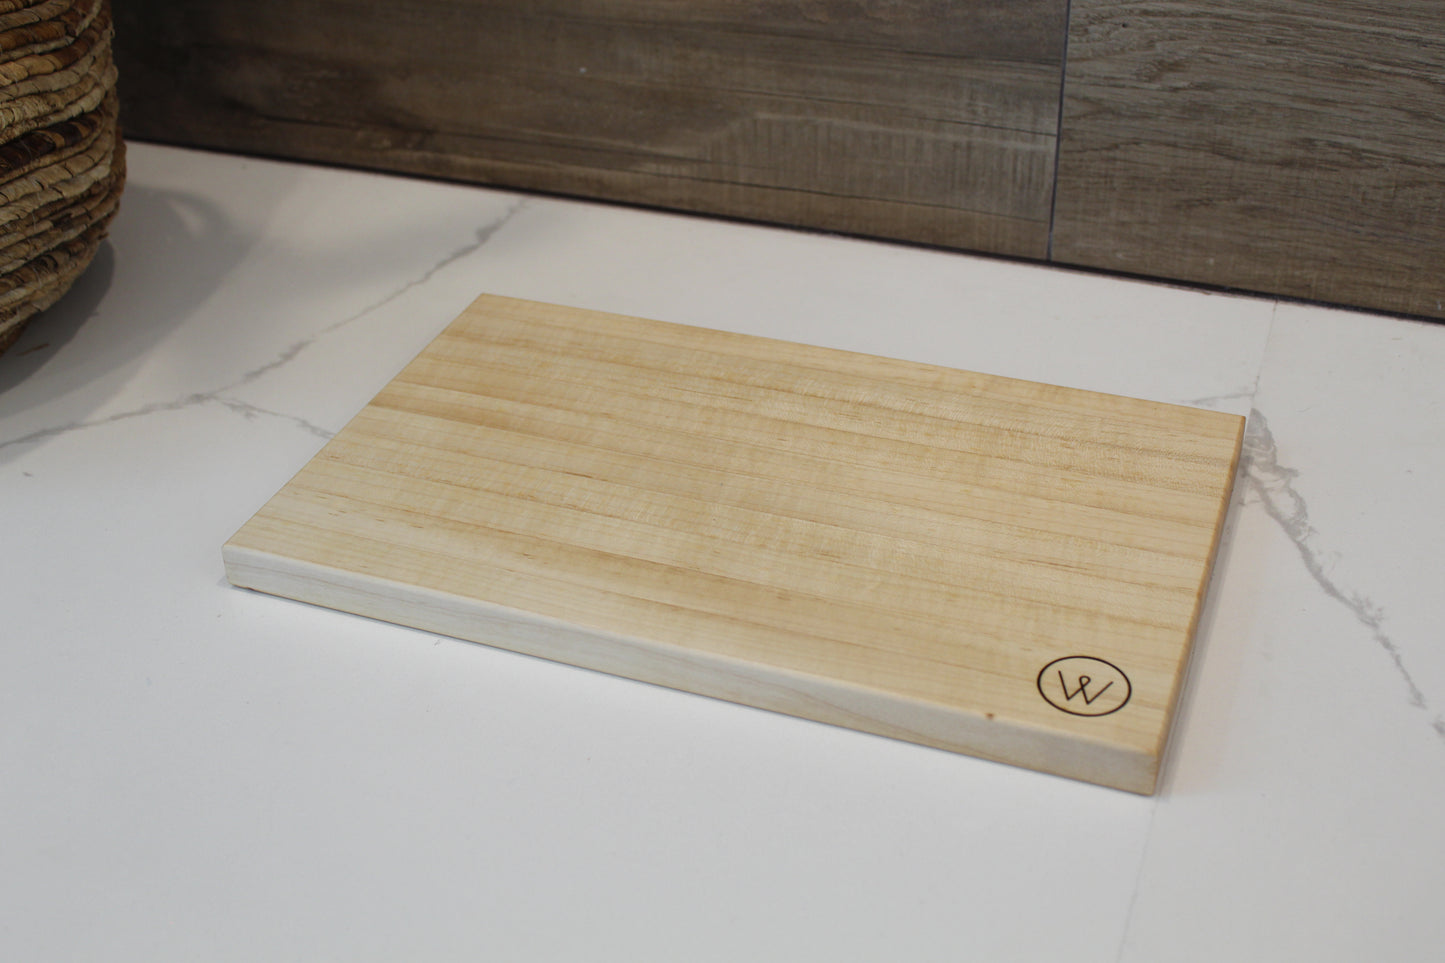 WELLB® Pequeño Wood Cutting Board, Edge grain, walnut, maple, red oak, cherry